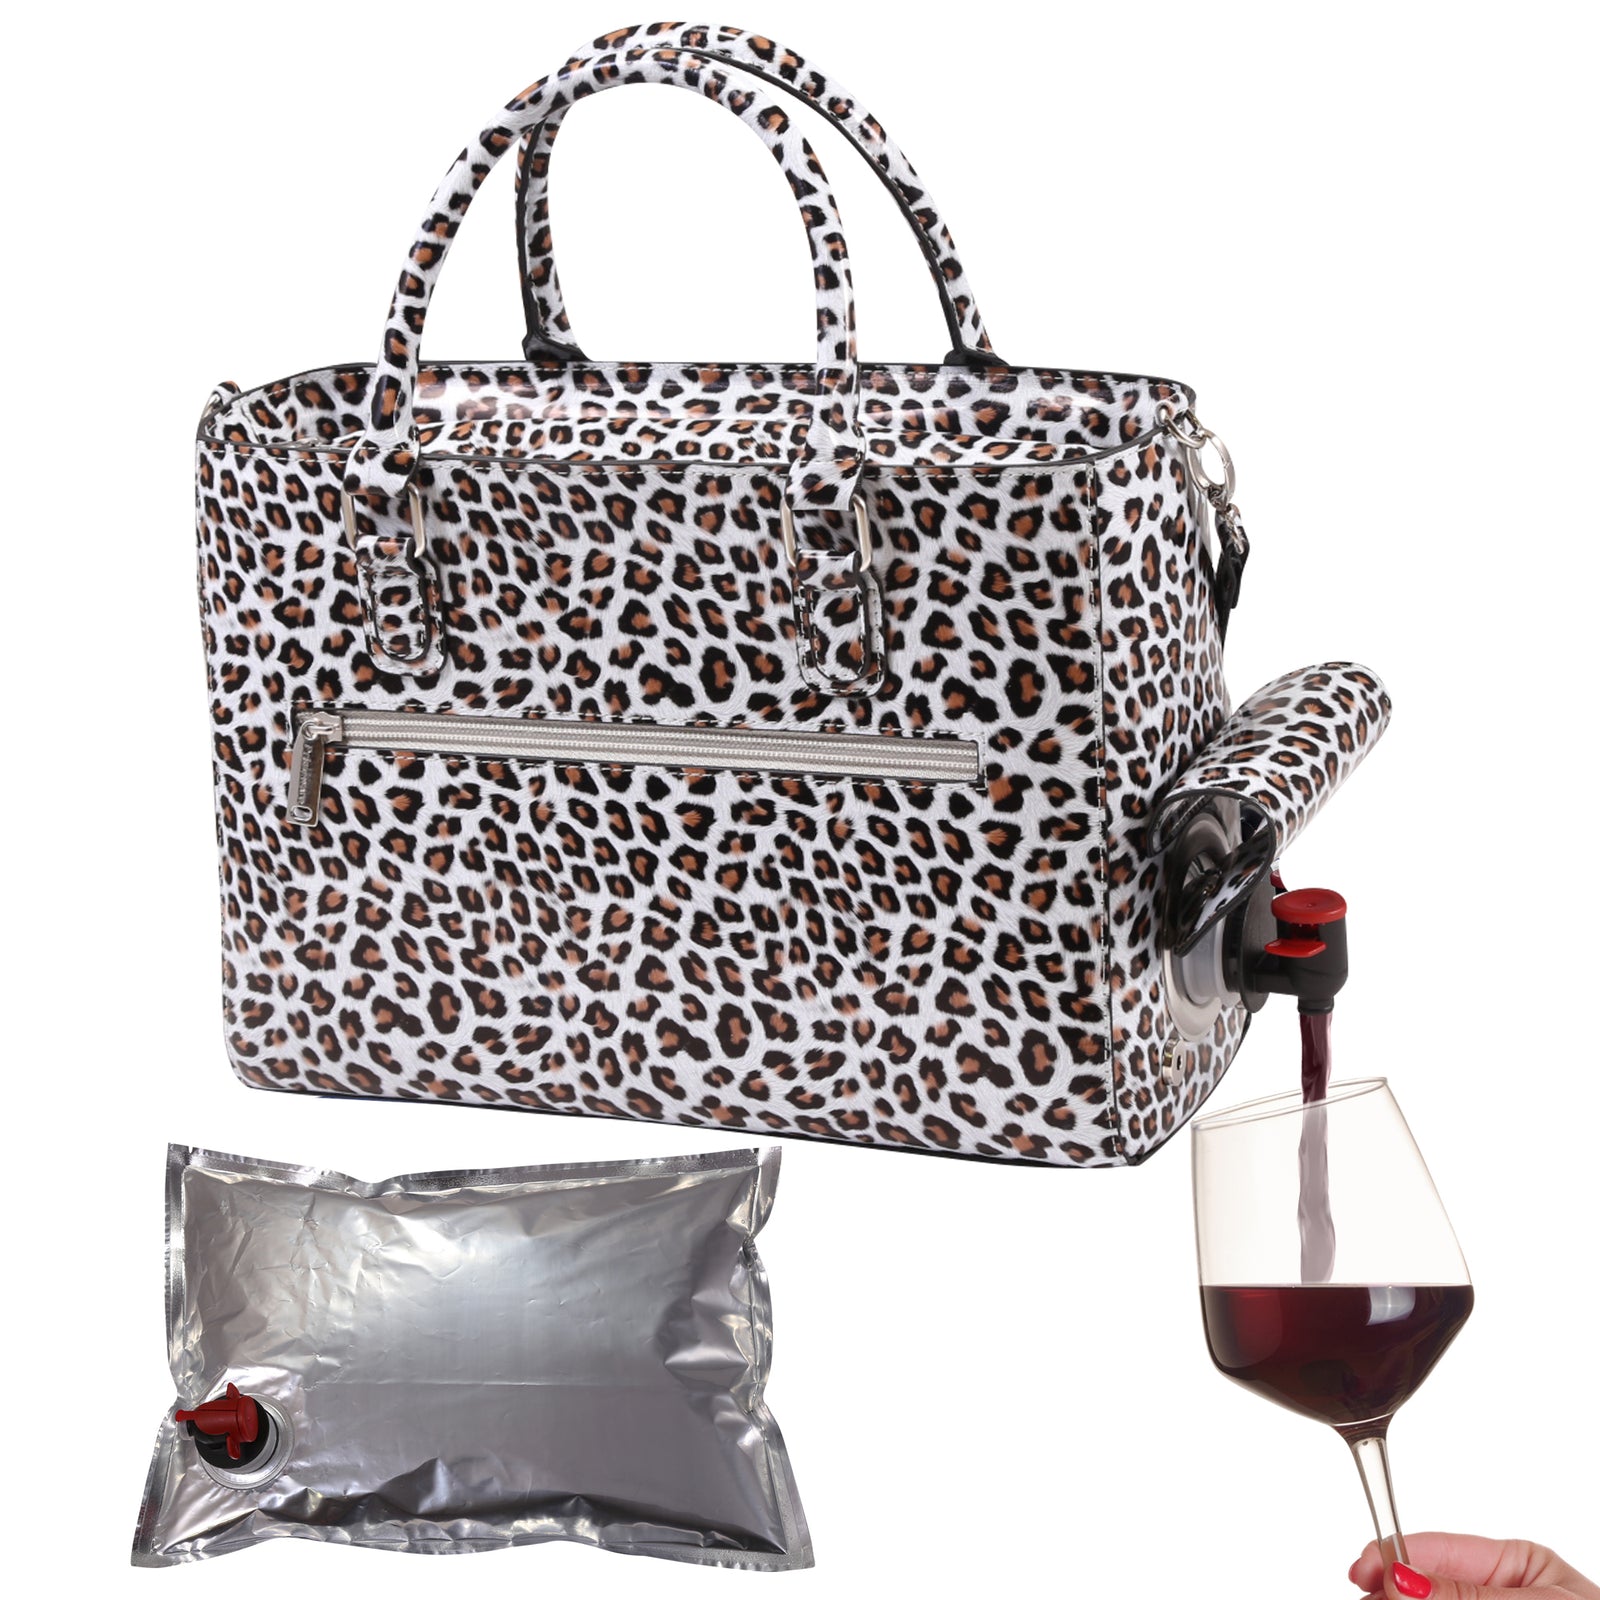 Large capacity generisch water bag fresh-keeping portable red wine